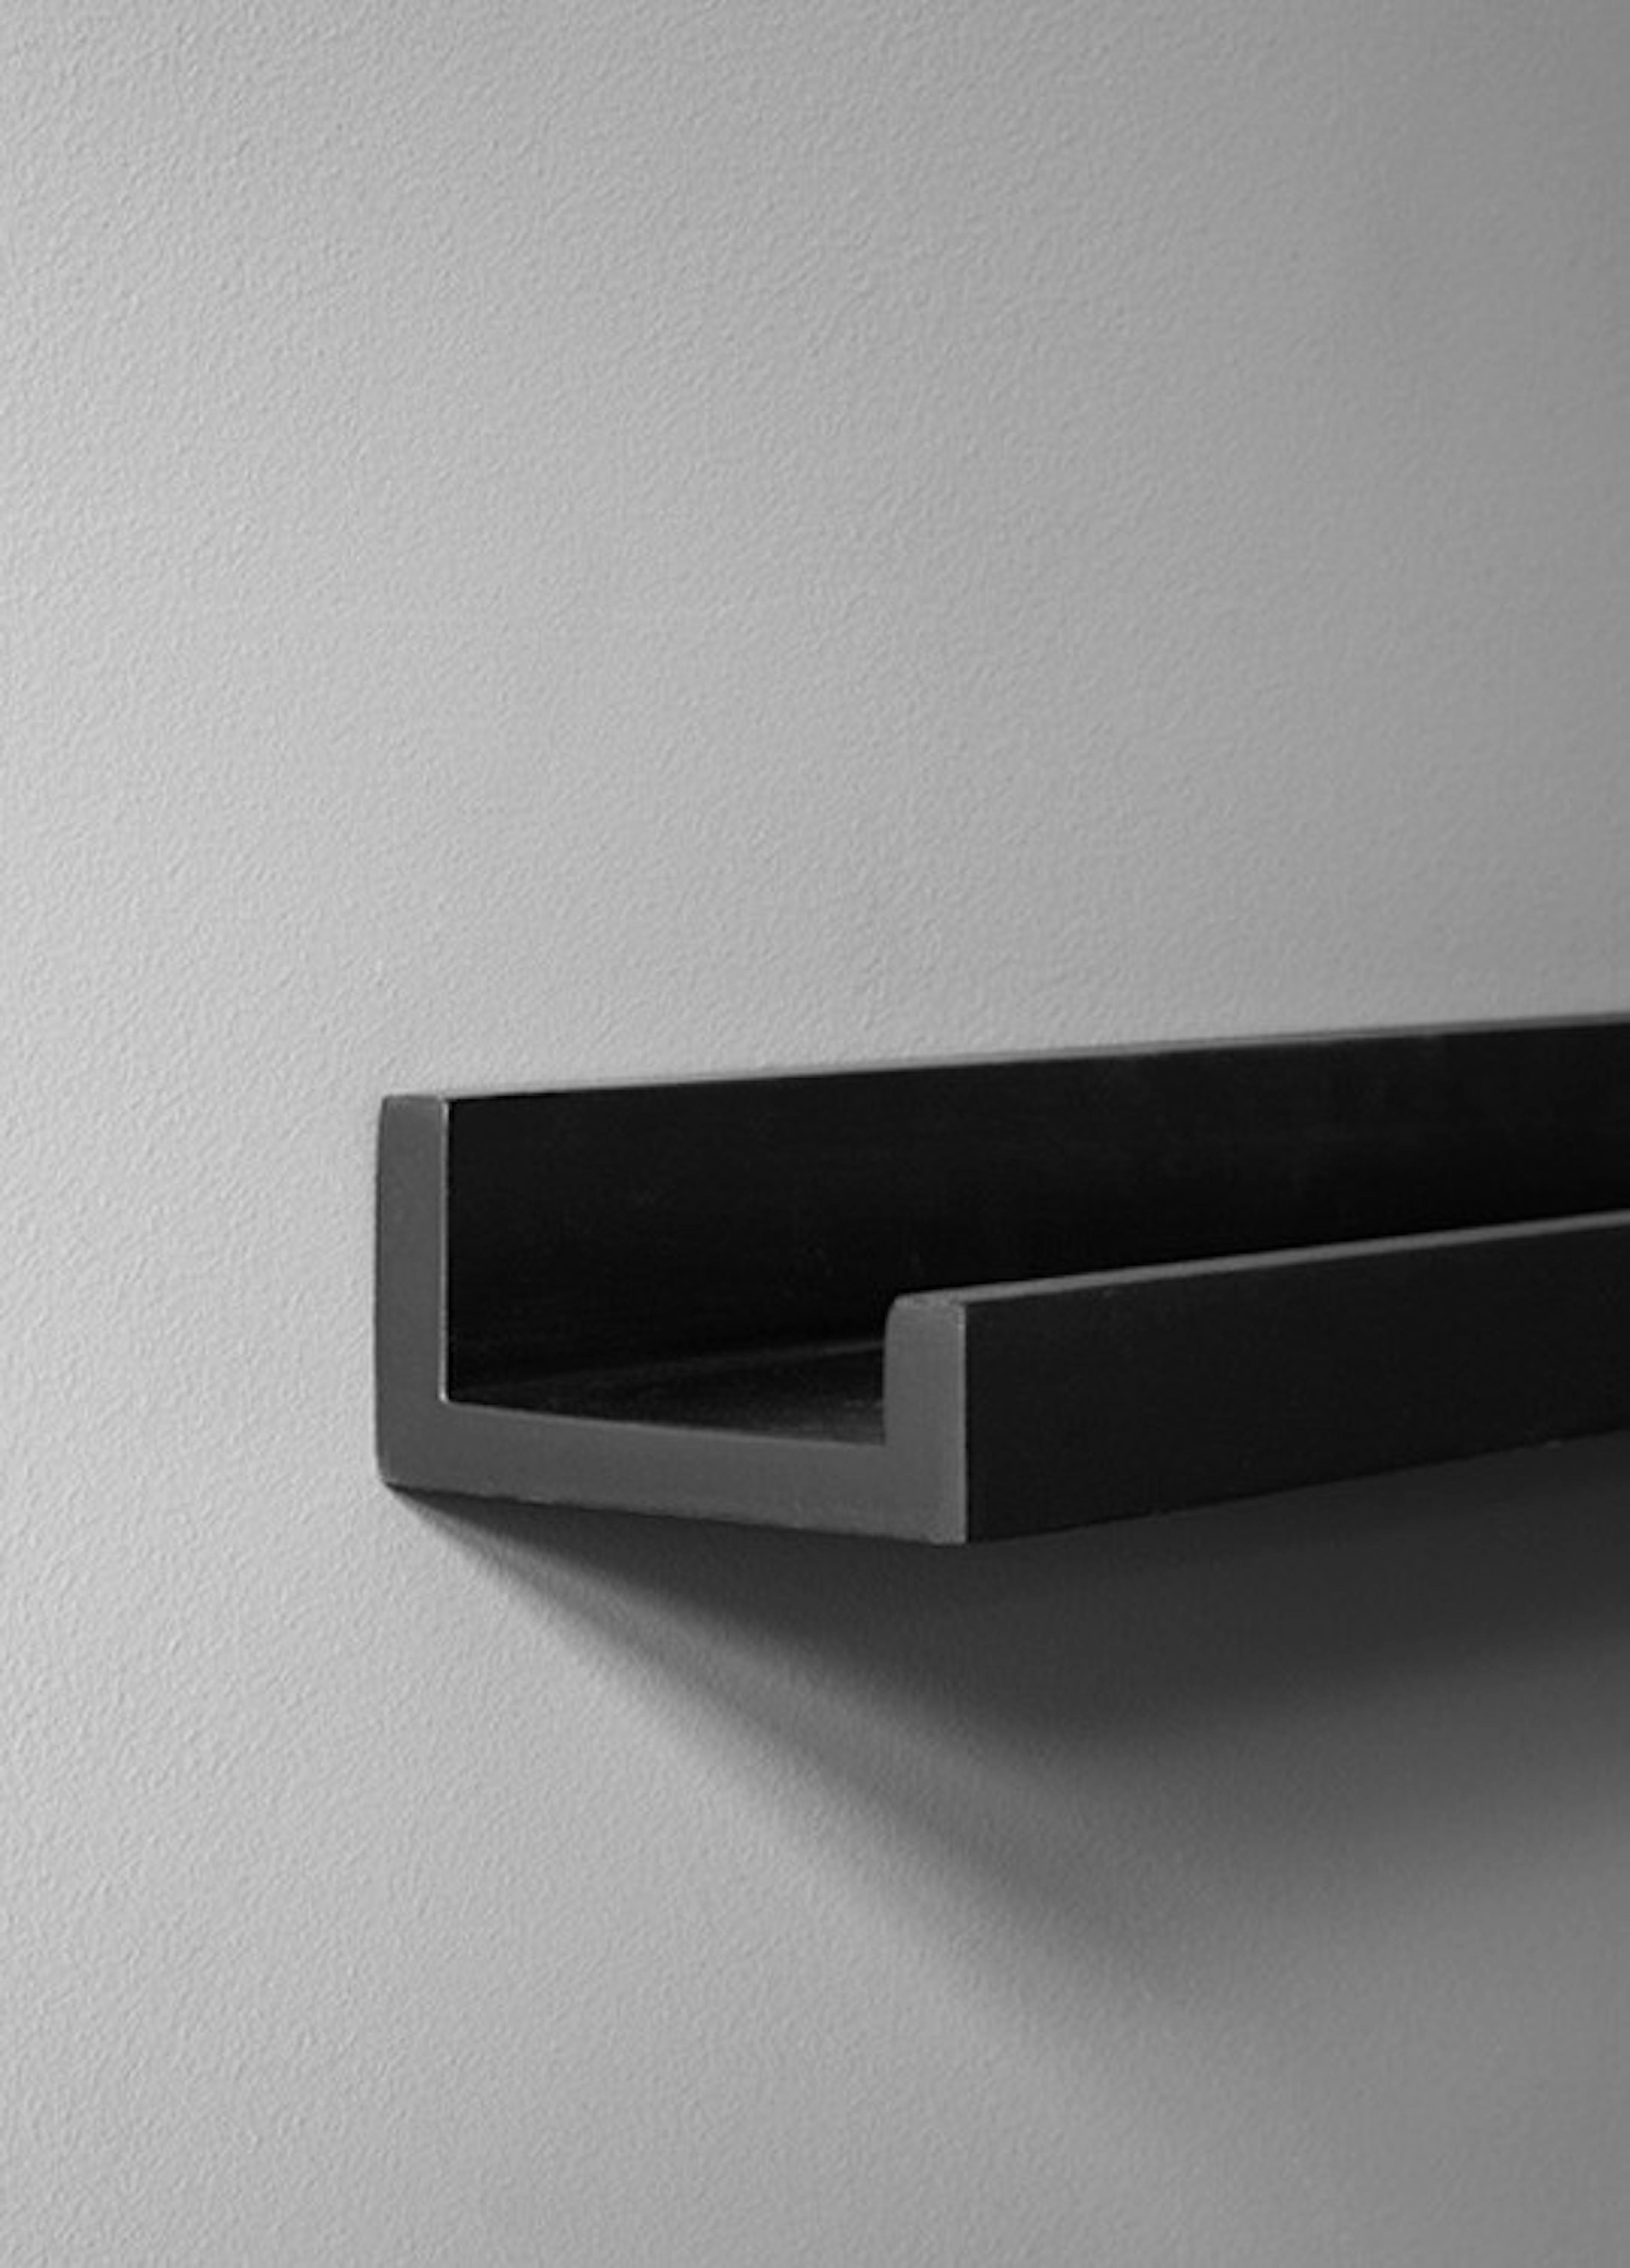 Black picture ledge (70cm - 28in) 0